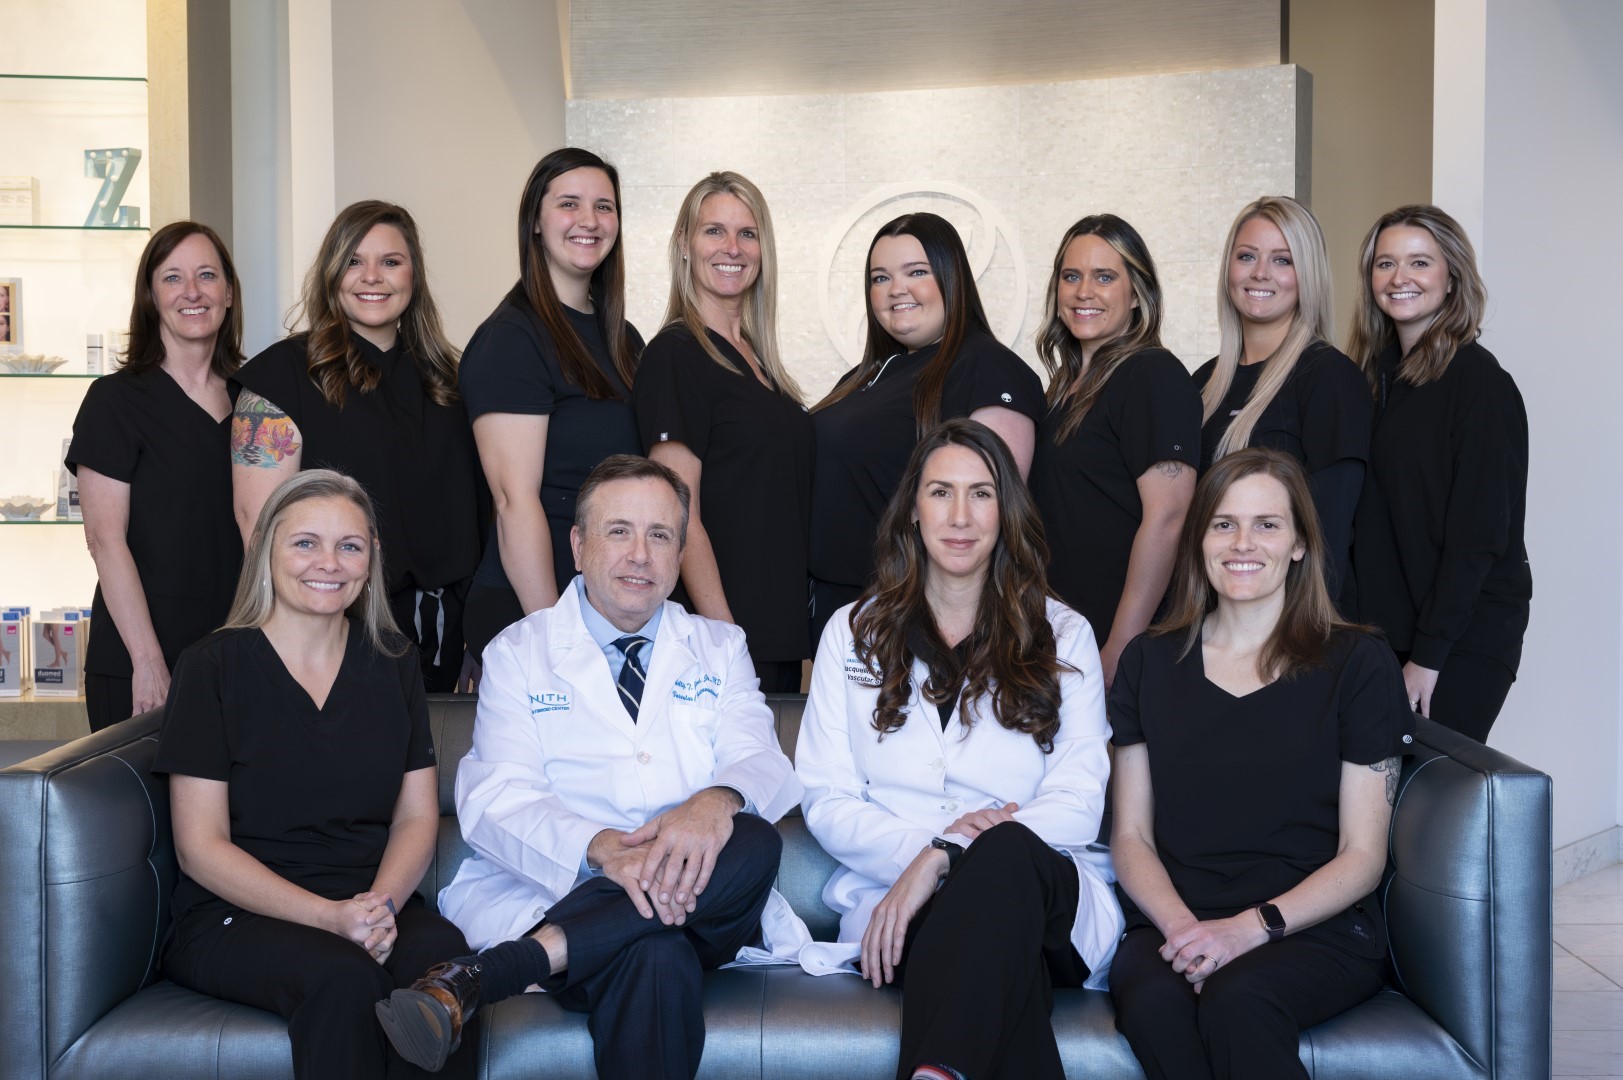 zenith vascular and fibroid center staff